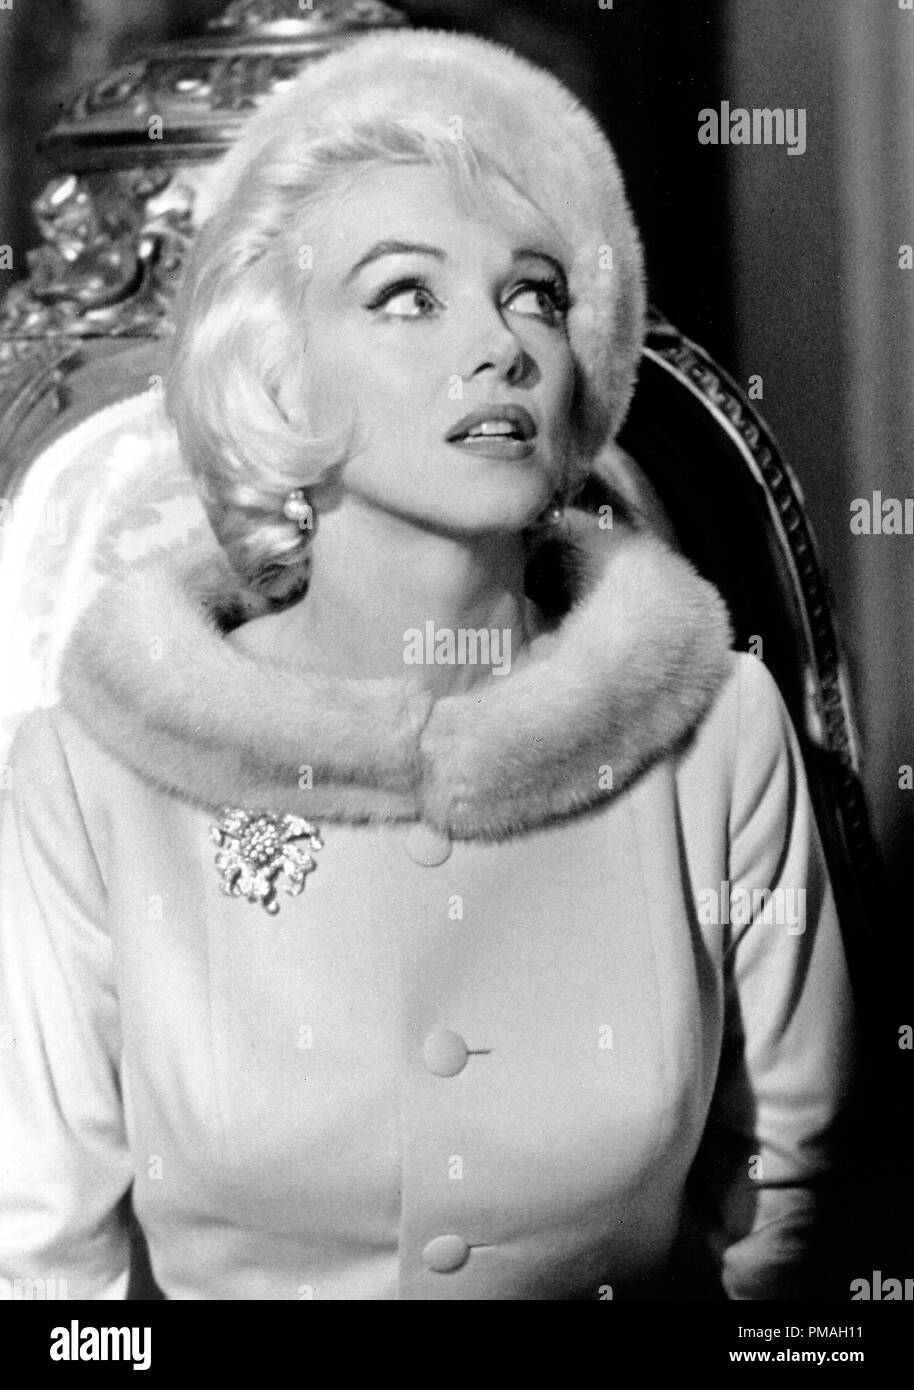 Marilyn Monroe handbag Stock Photo - Alamy